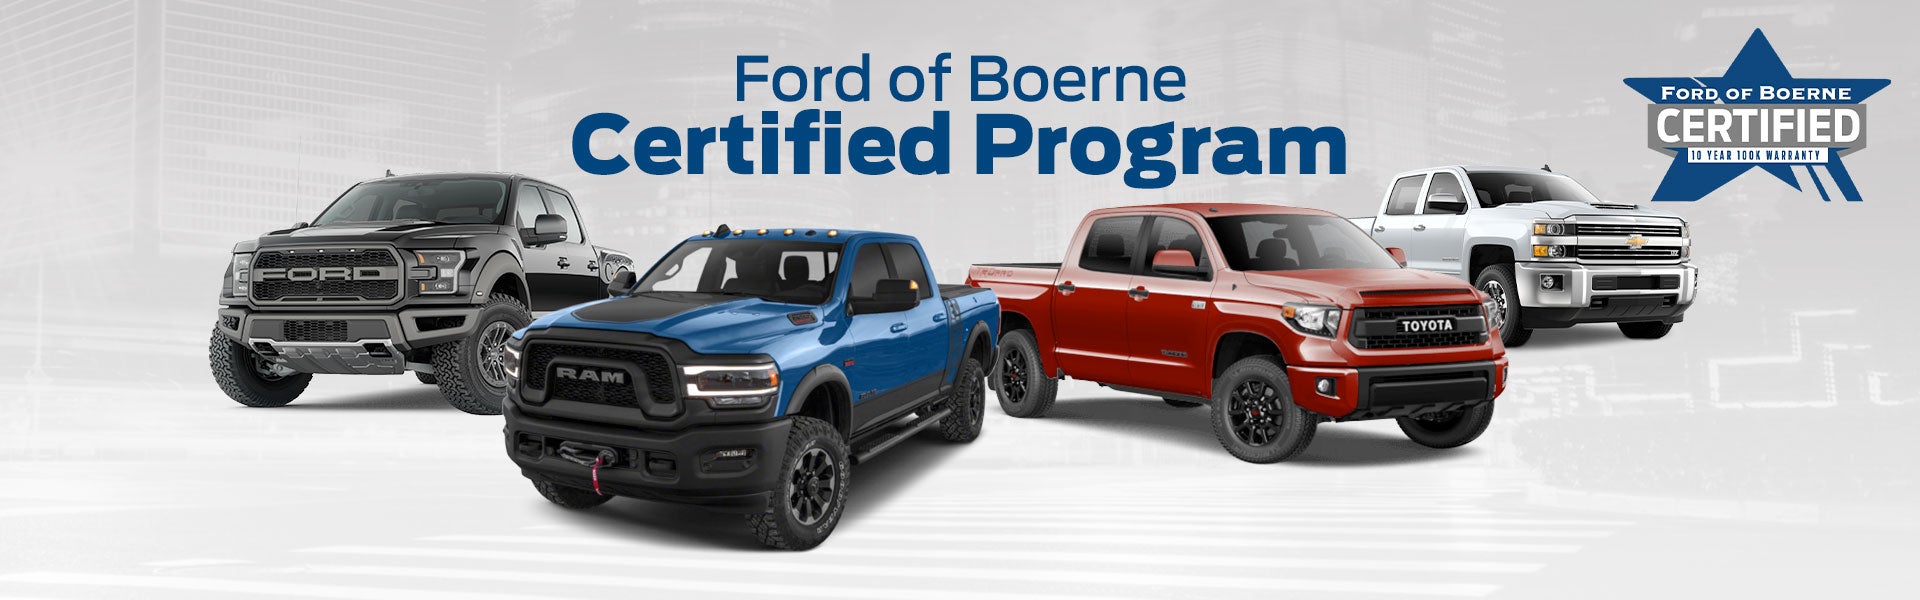 Ford of Boerne Certified Program